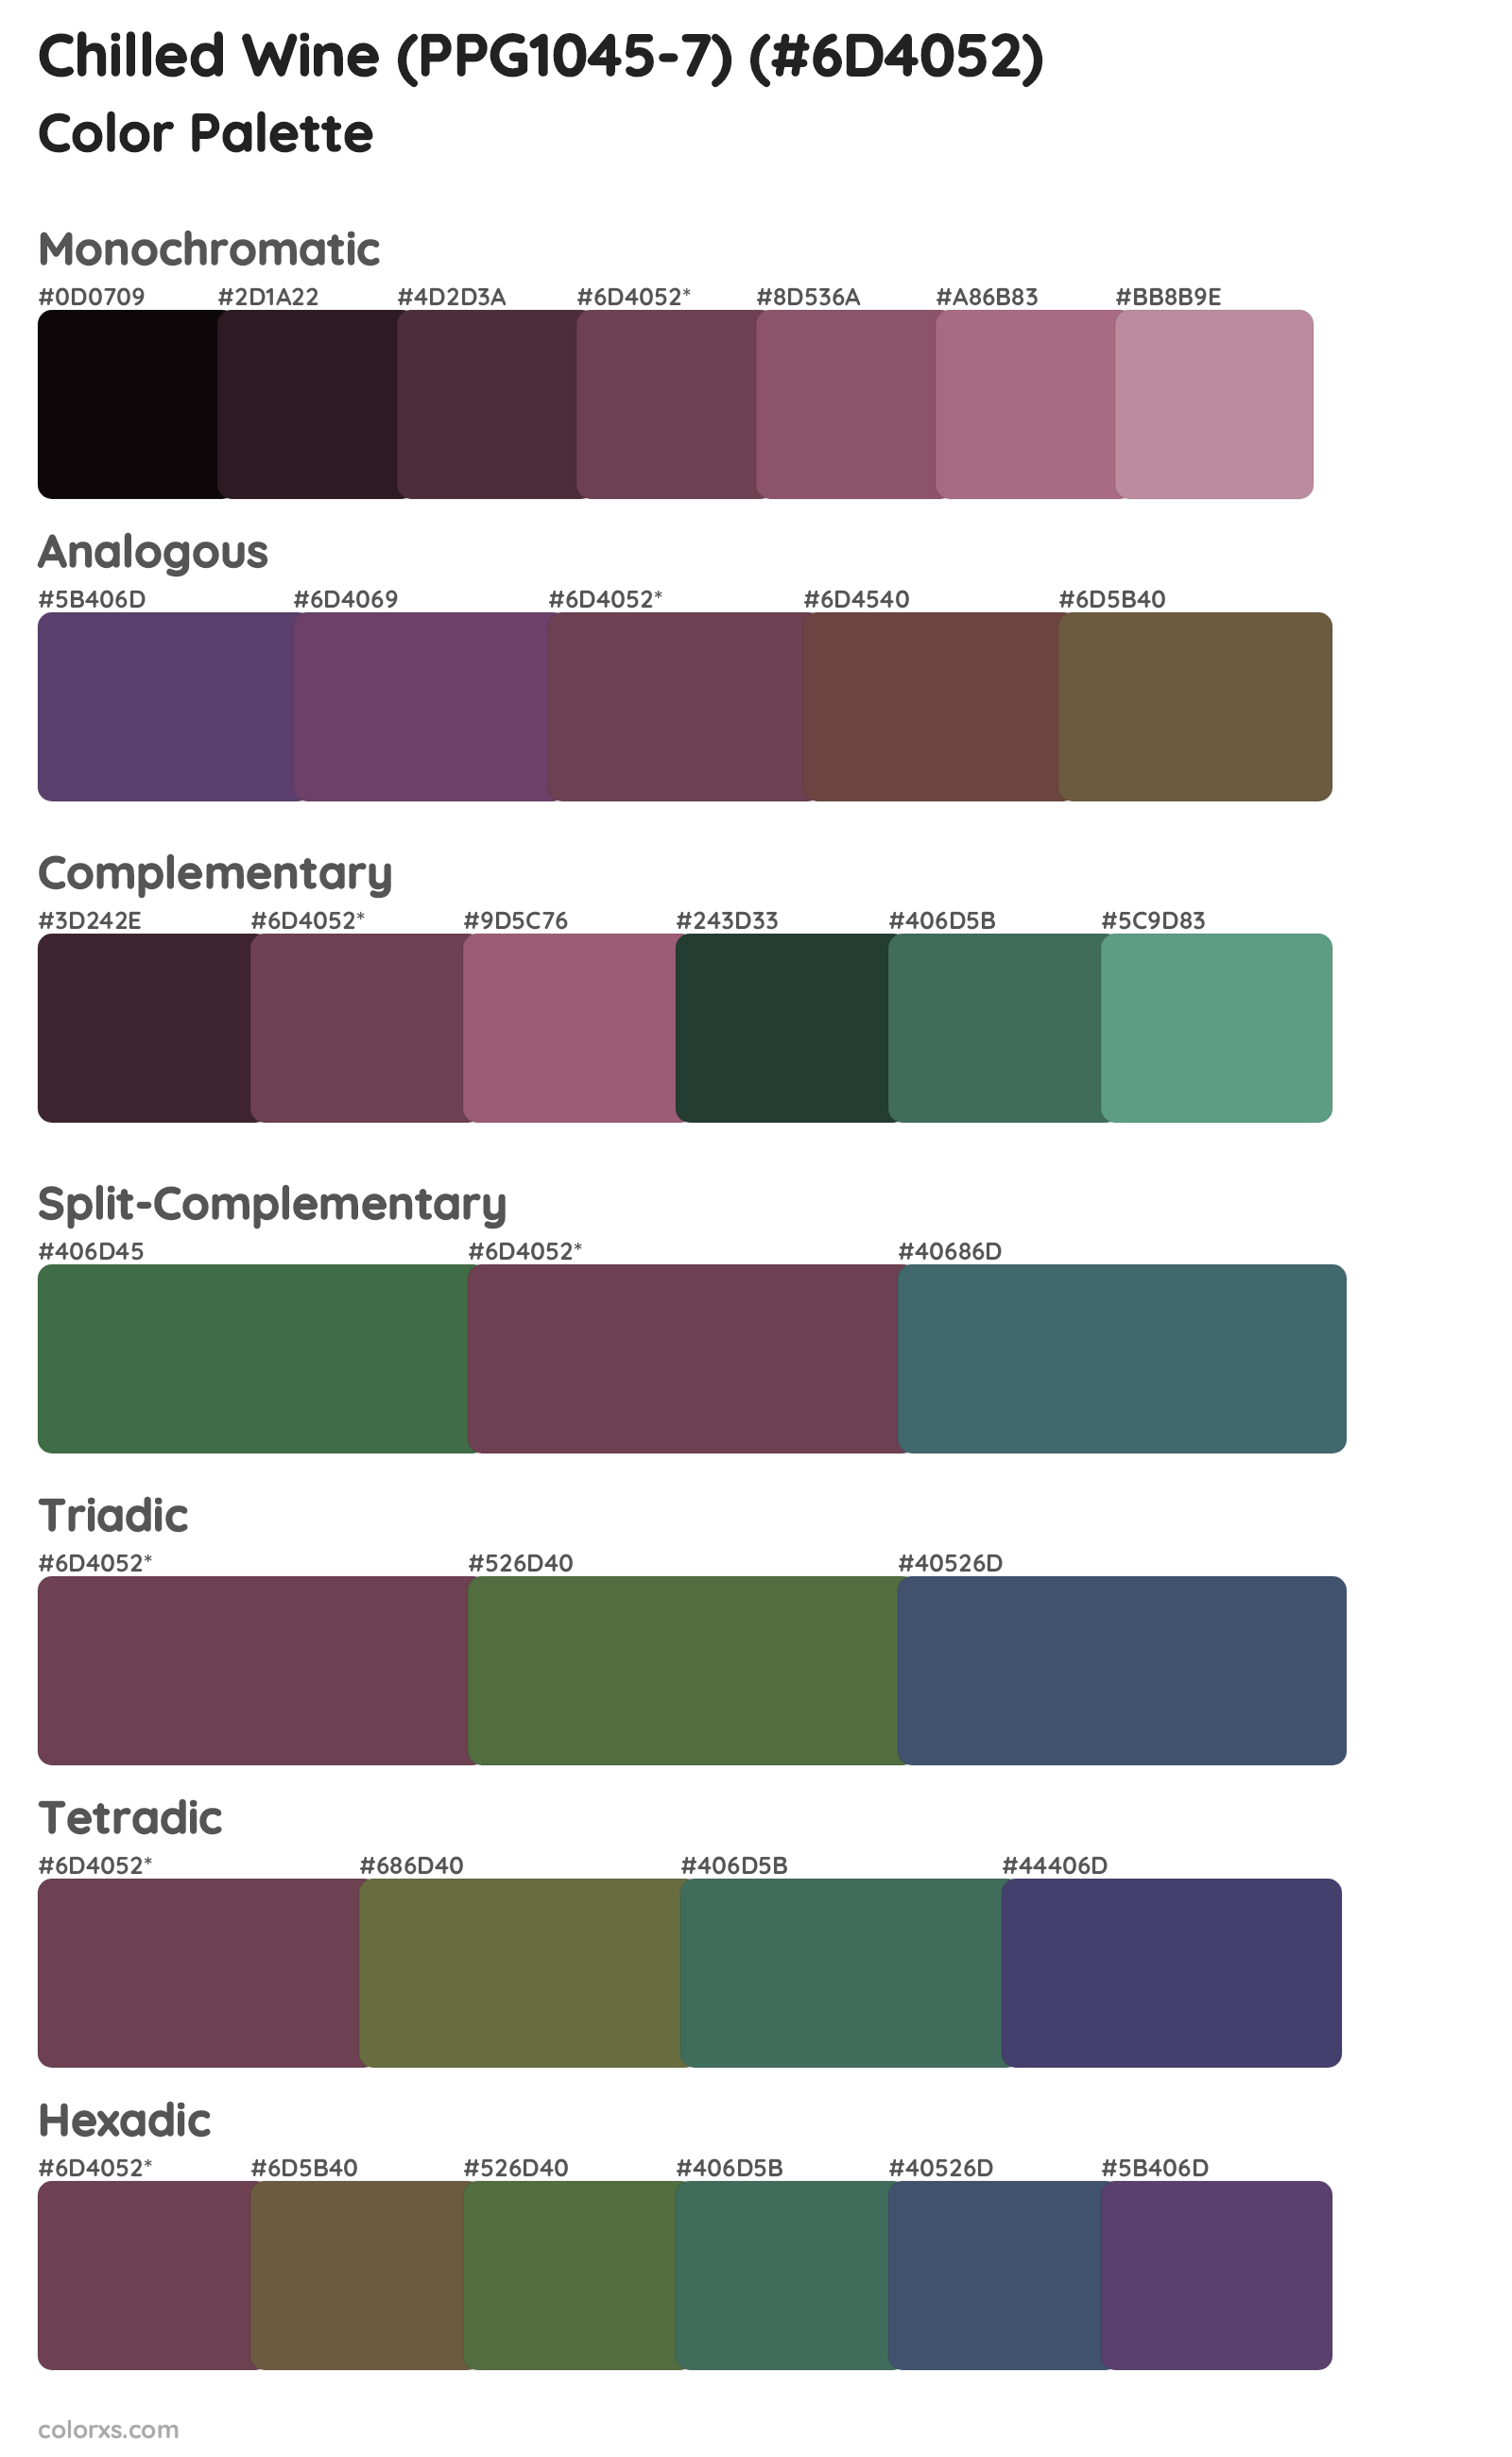 Chilled Wine (PPG1045-7) Color Scheme Palettes